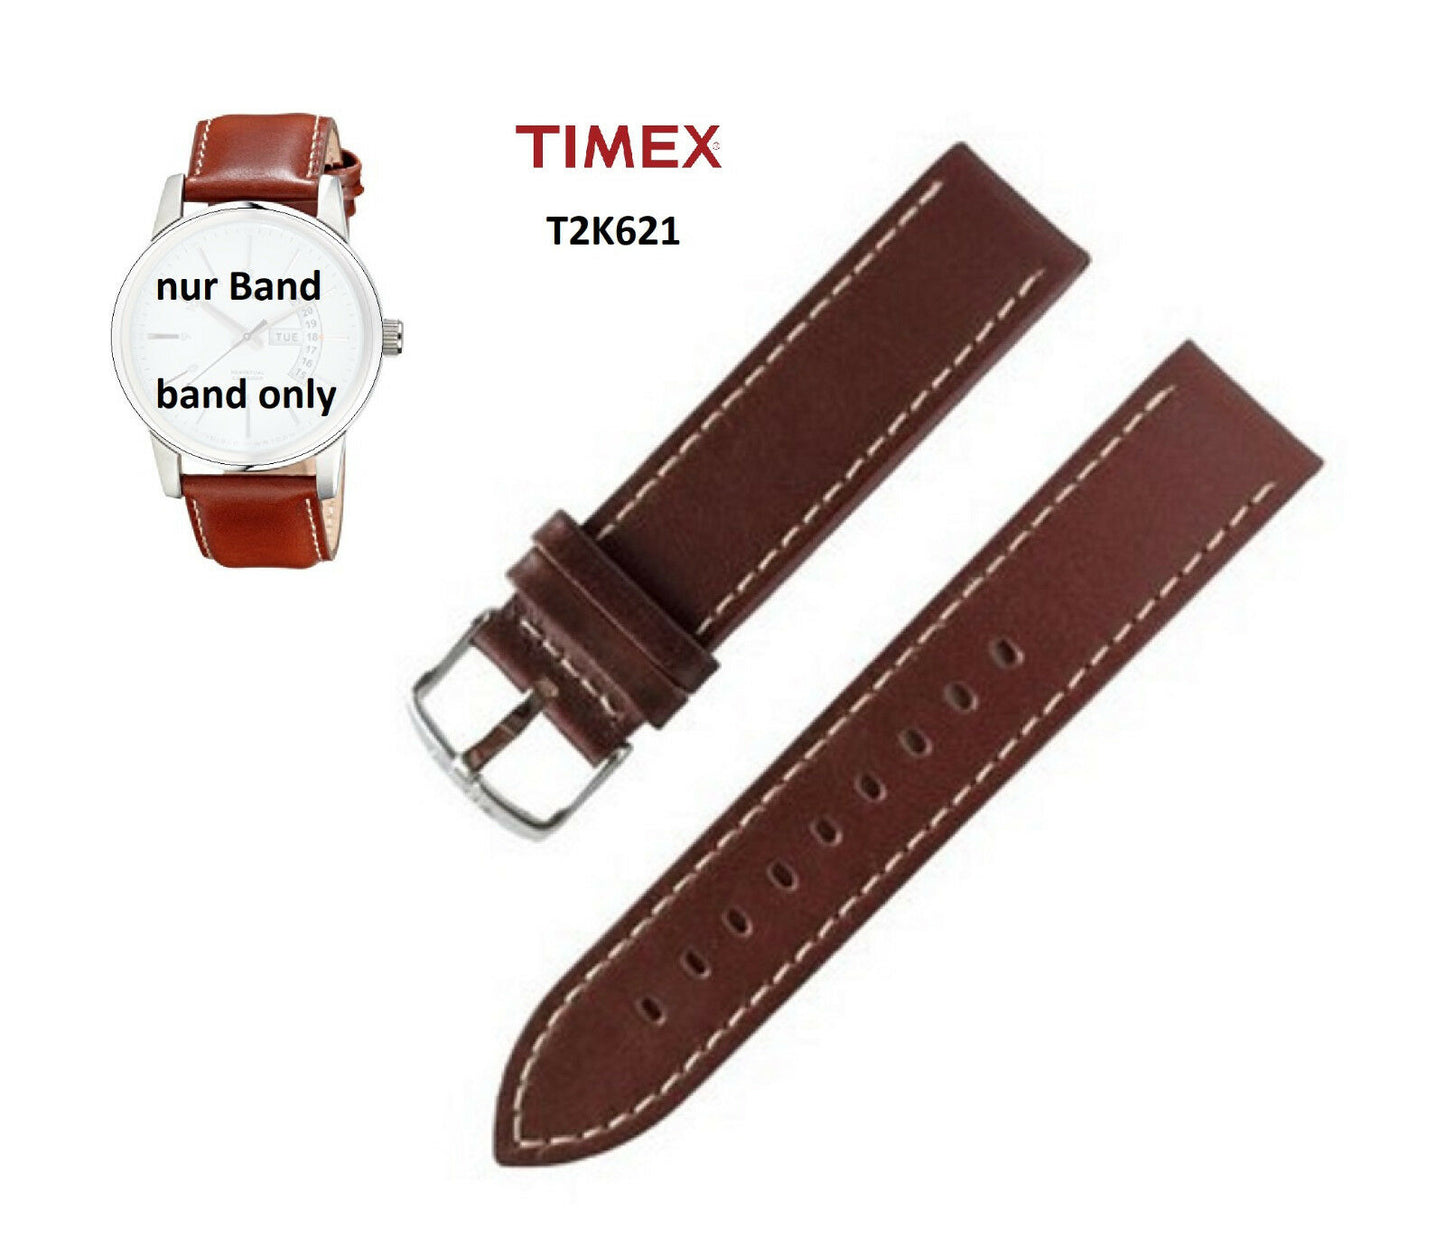 Timex Ersatzarmband T2K621 Ewiger Kalender 22mm Ersatzband universal fits T2K631